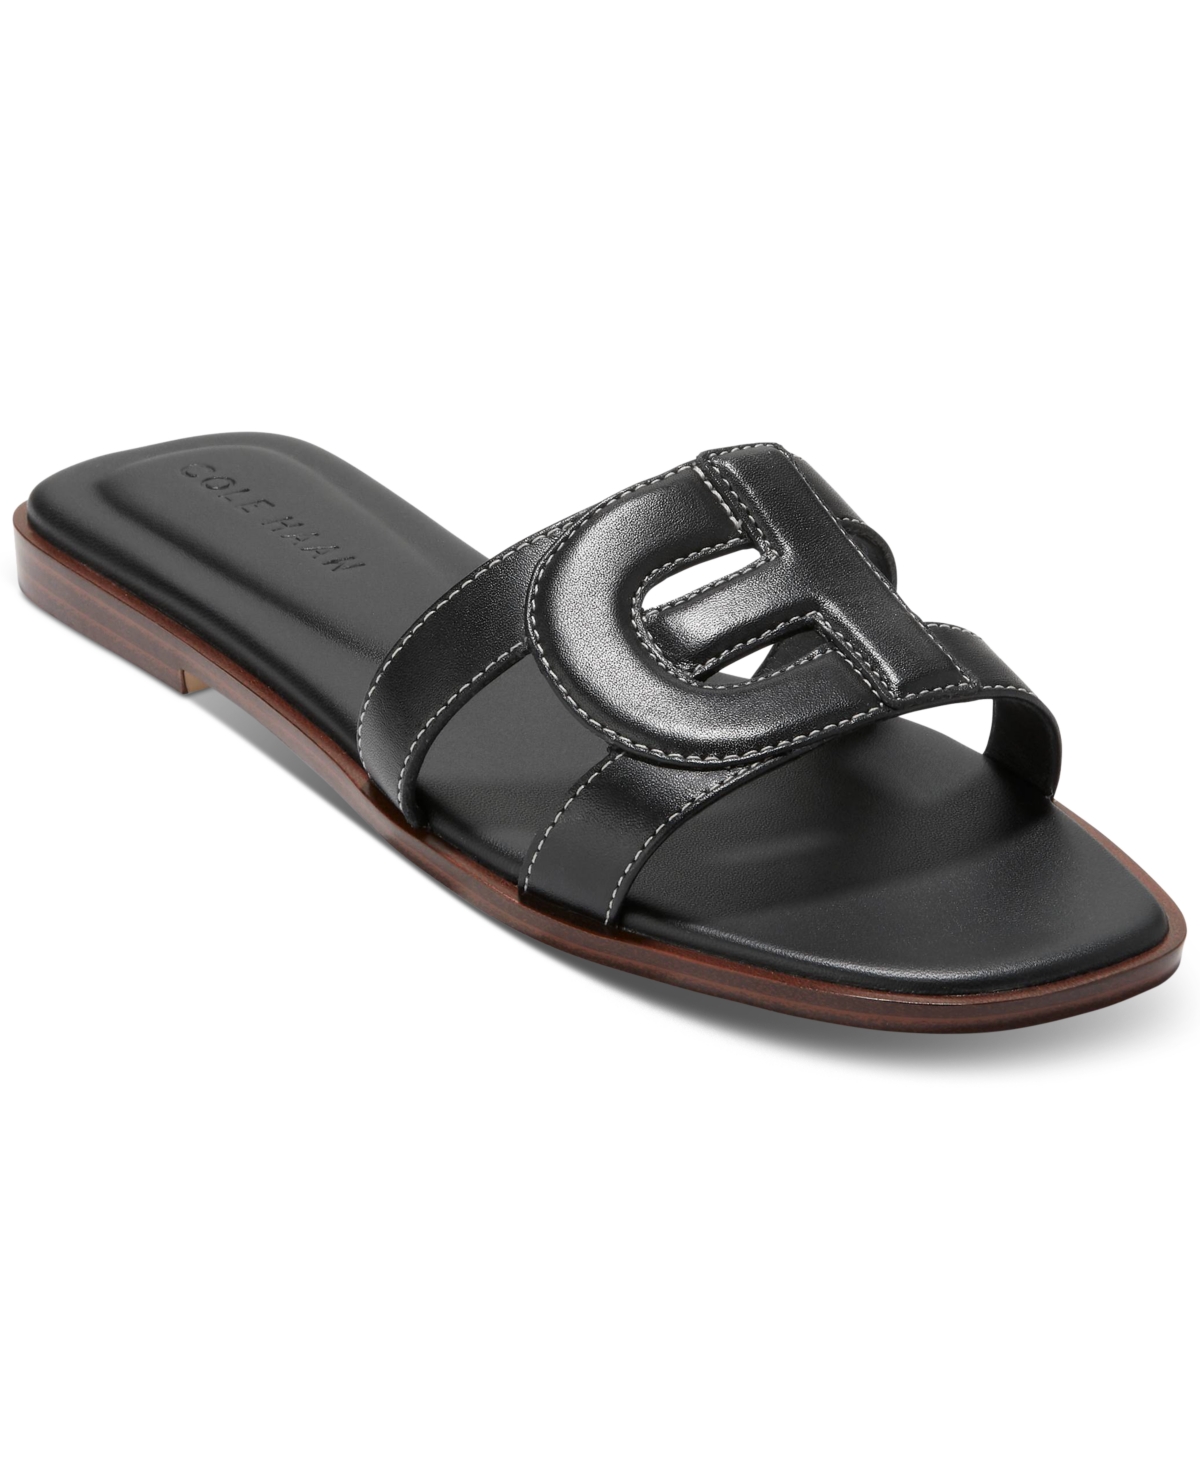 Women's Chrisee Flat Sandals - Black Leather